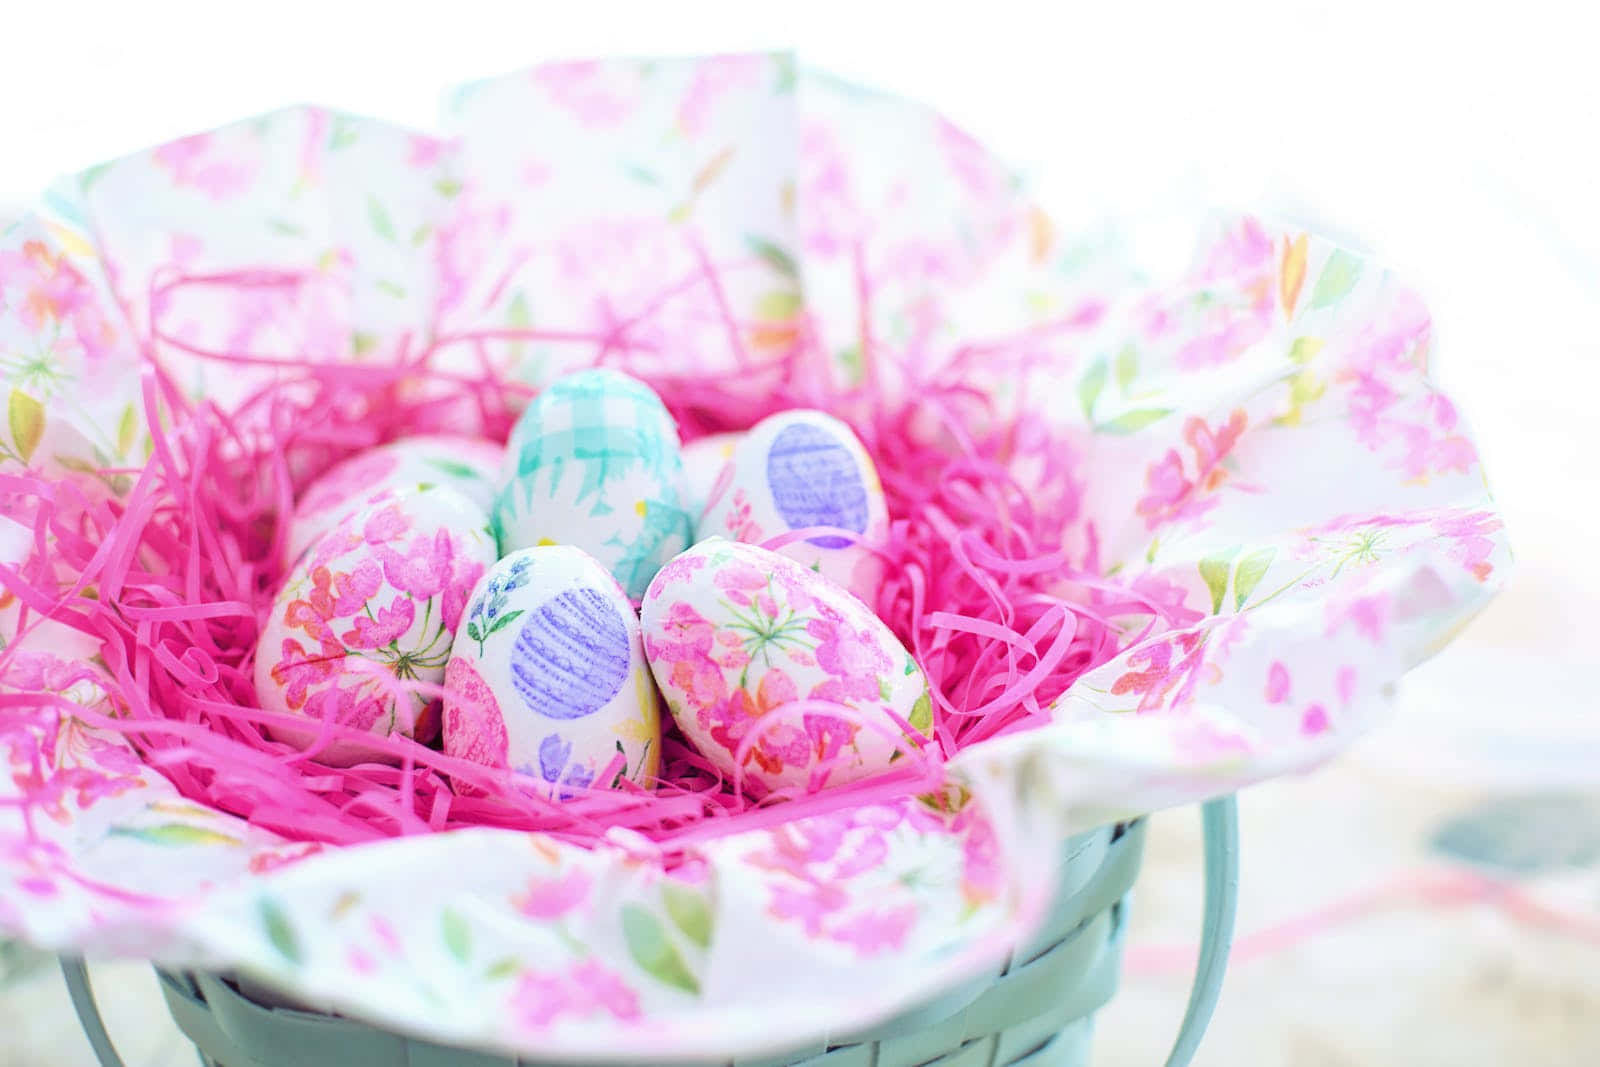 Celebraesta Colorida Pascua Con Esta Hermosa Decoración De Huevos Pastel. Fondo de pantalla